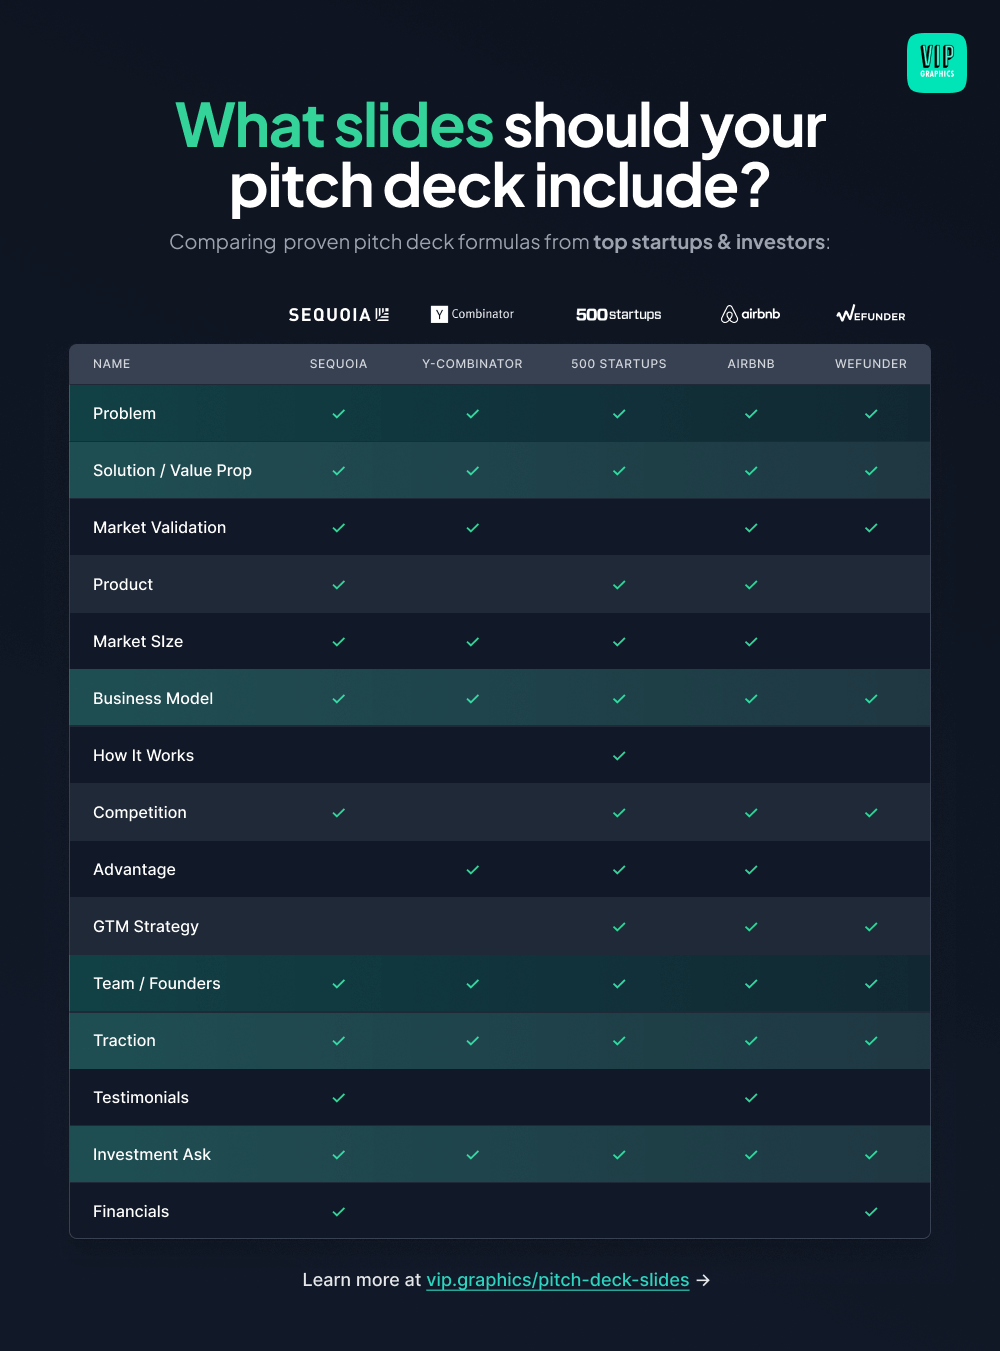 The perfect pitch deck recipe: comparing formulas